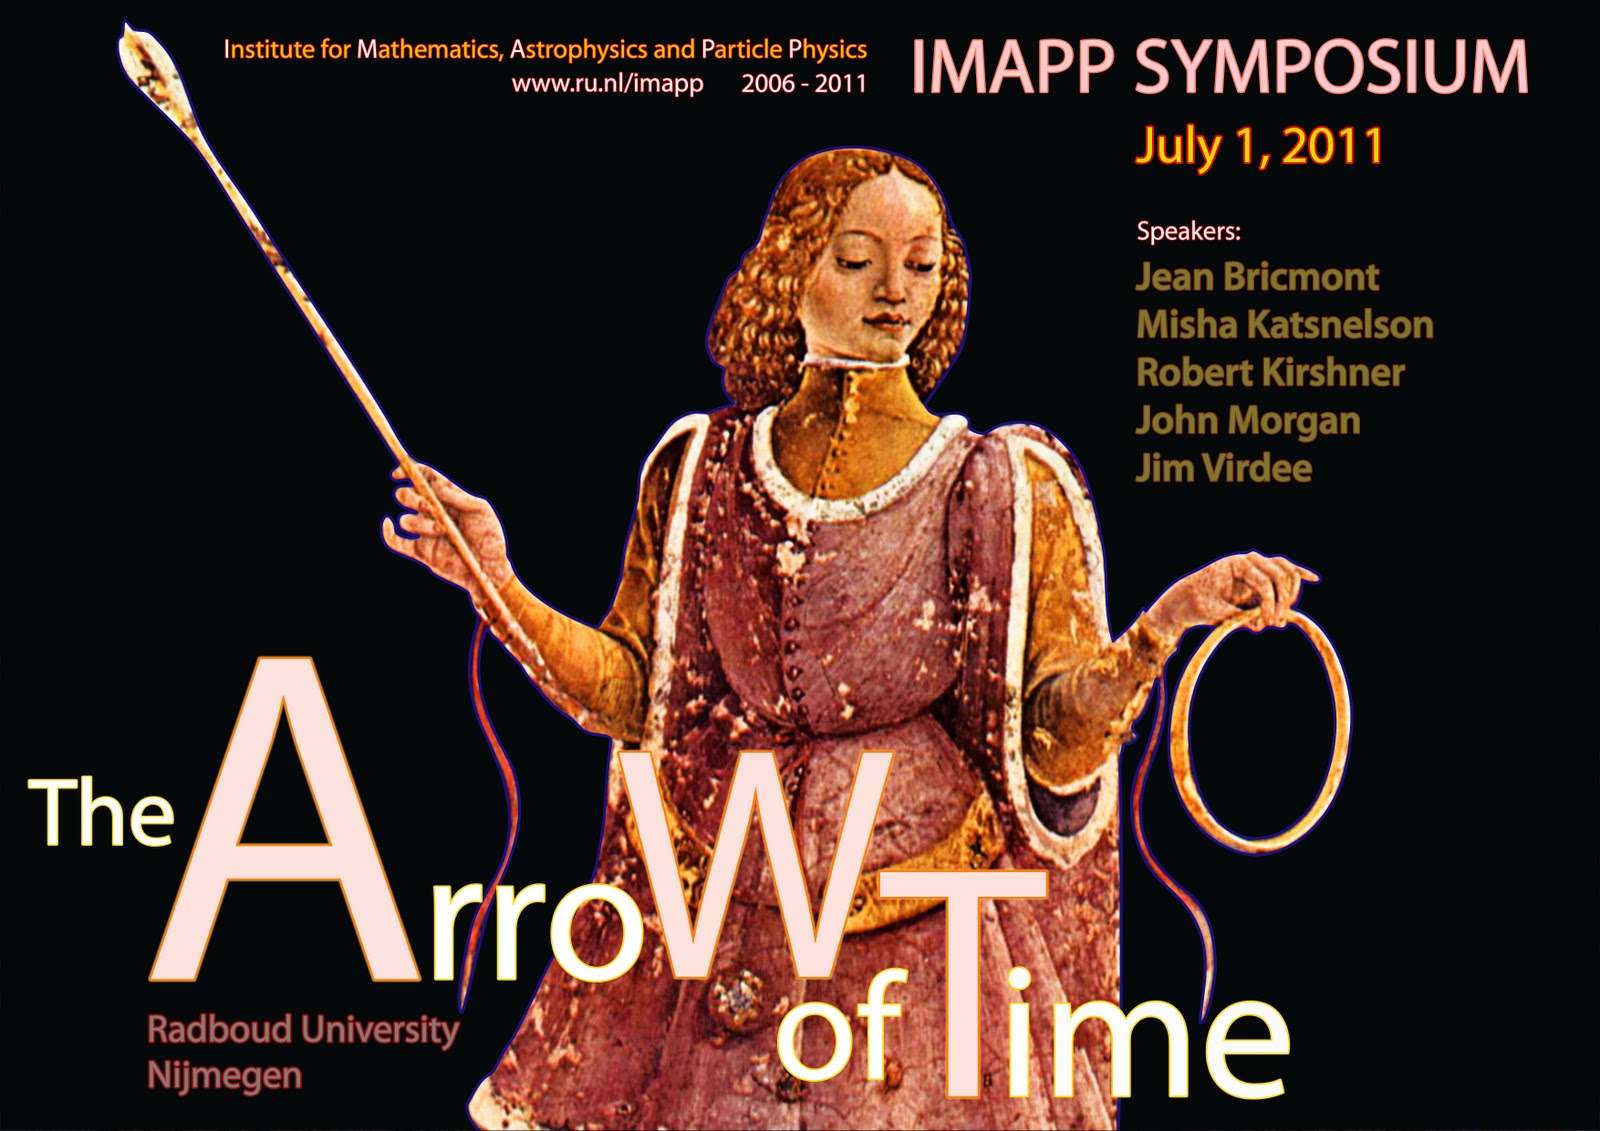 arrow of time symposium 2011